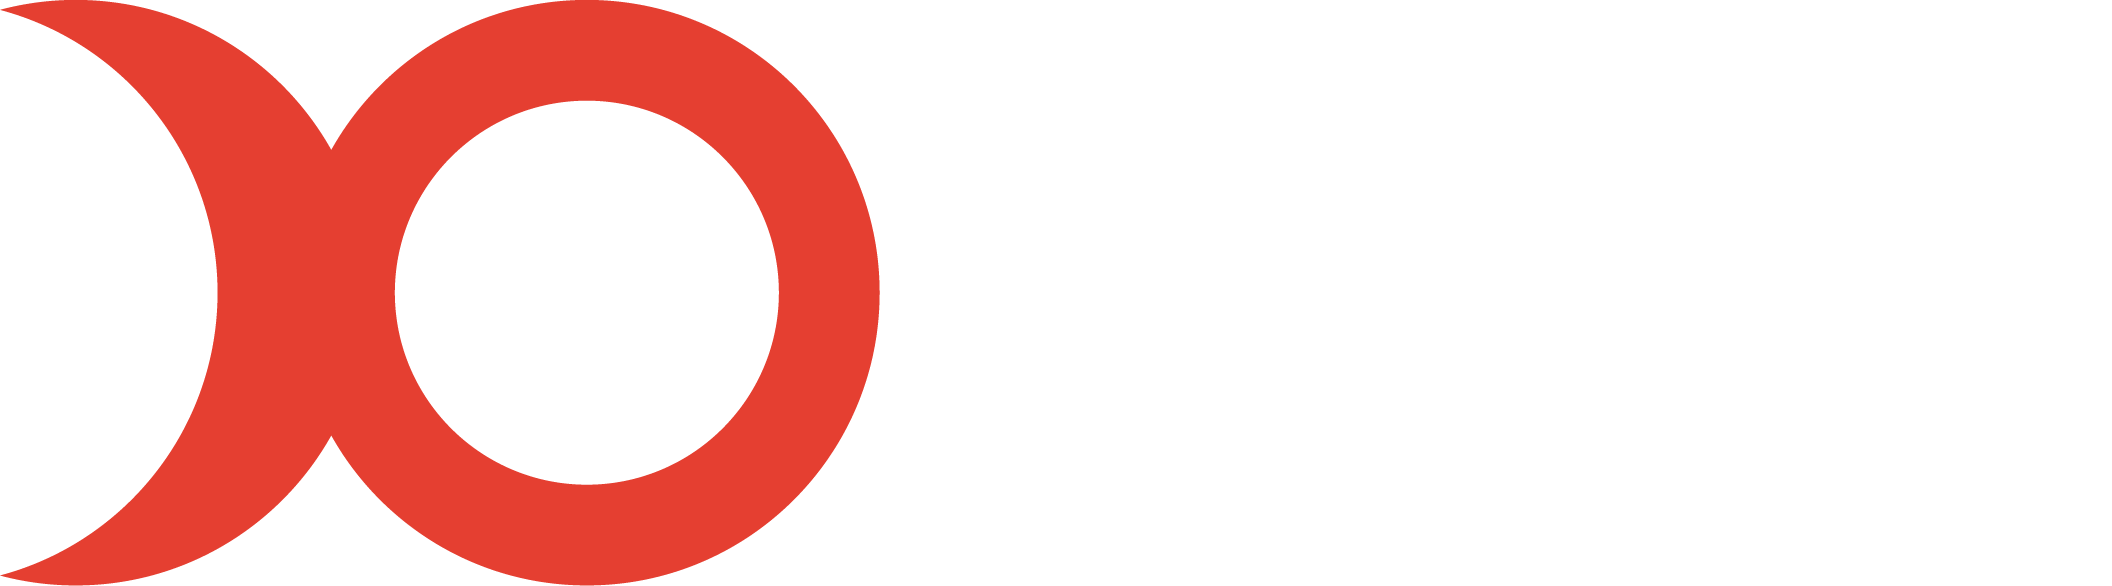 Piranha Advertising and Marketing Solutions ltd logo